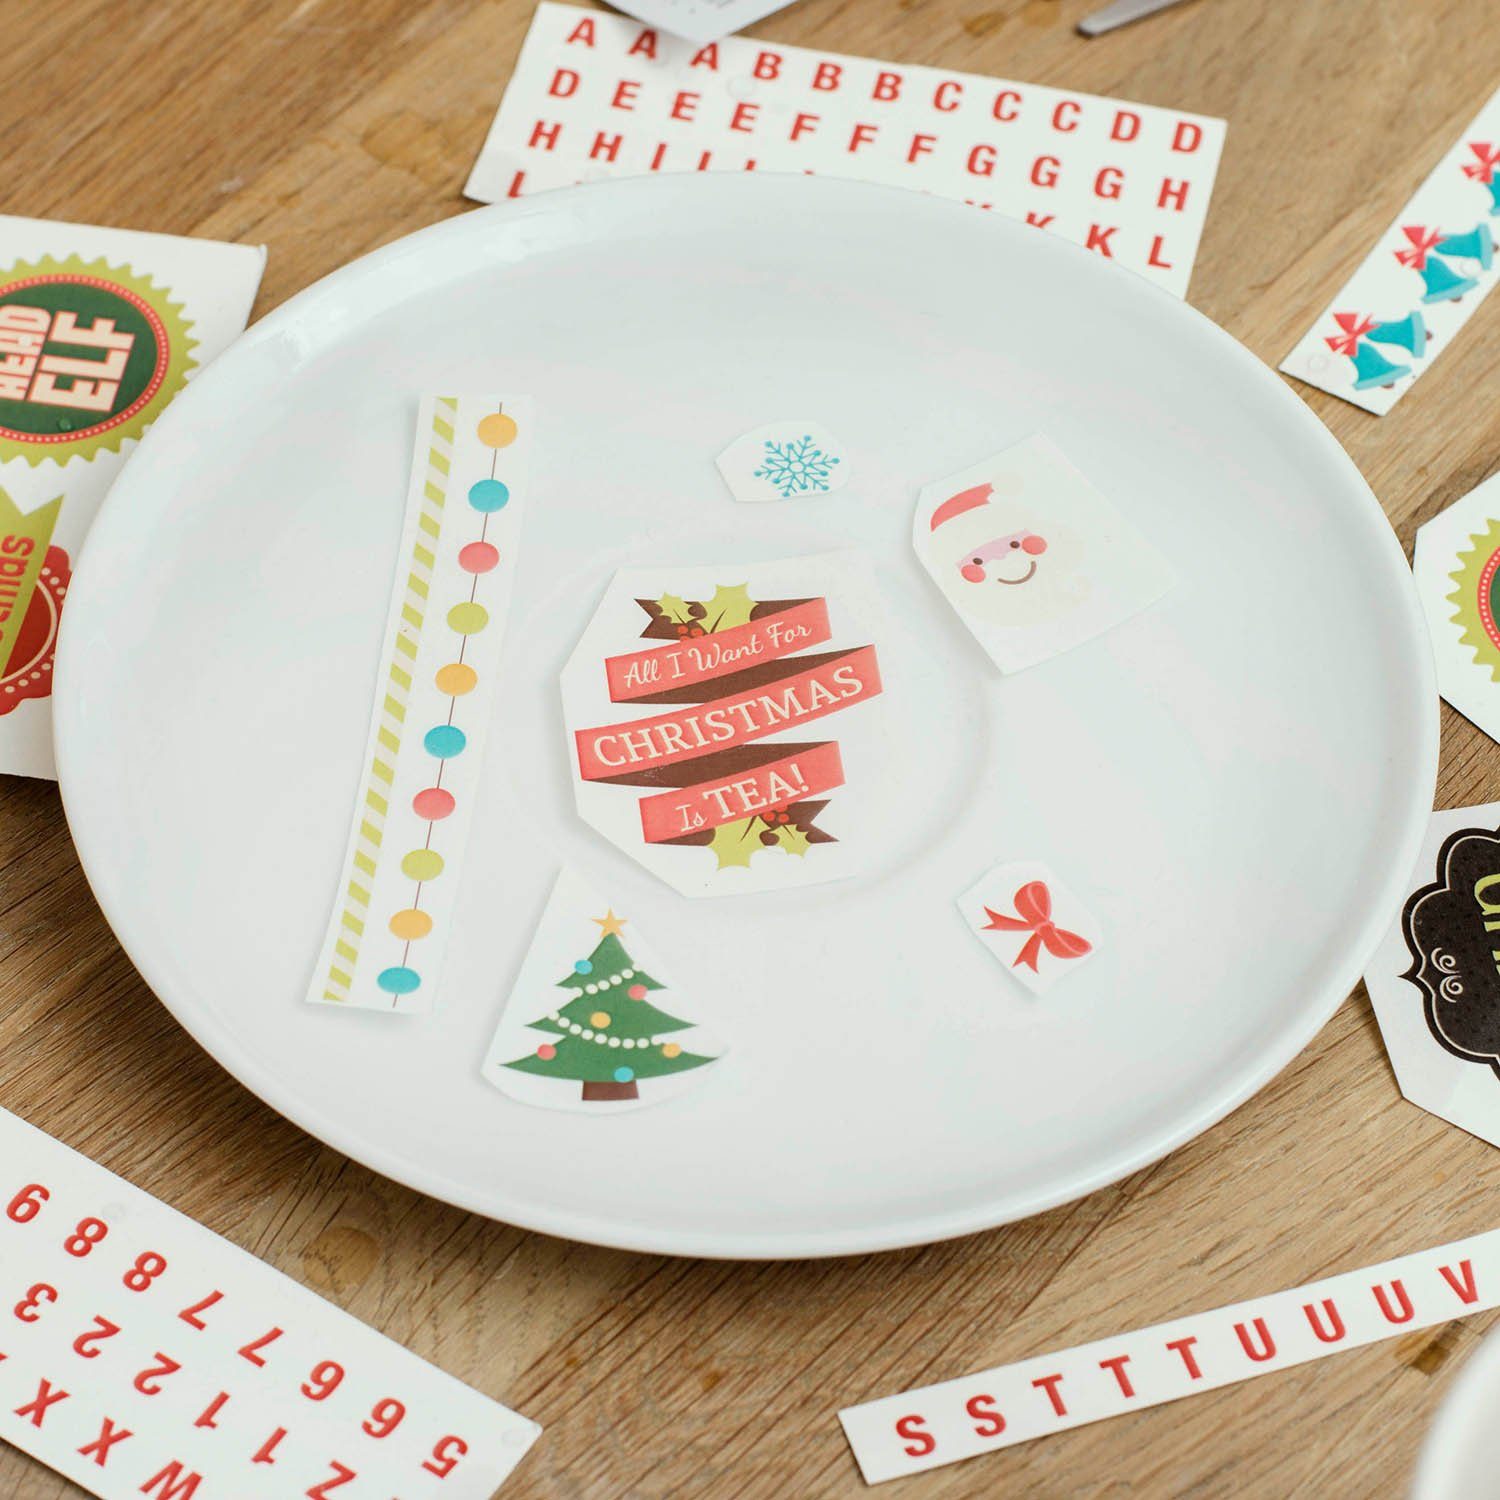 Tasse (inkl. Mug" Sticker), Christmas "Make Keramik, DIY a Thumbs Up Sticker inkl.